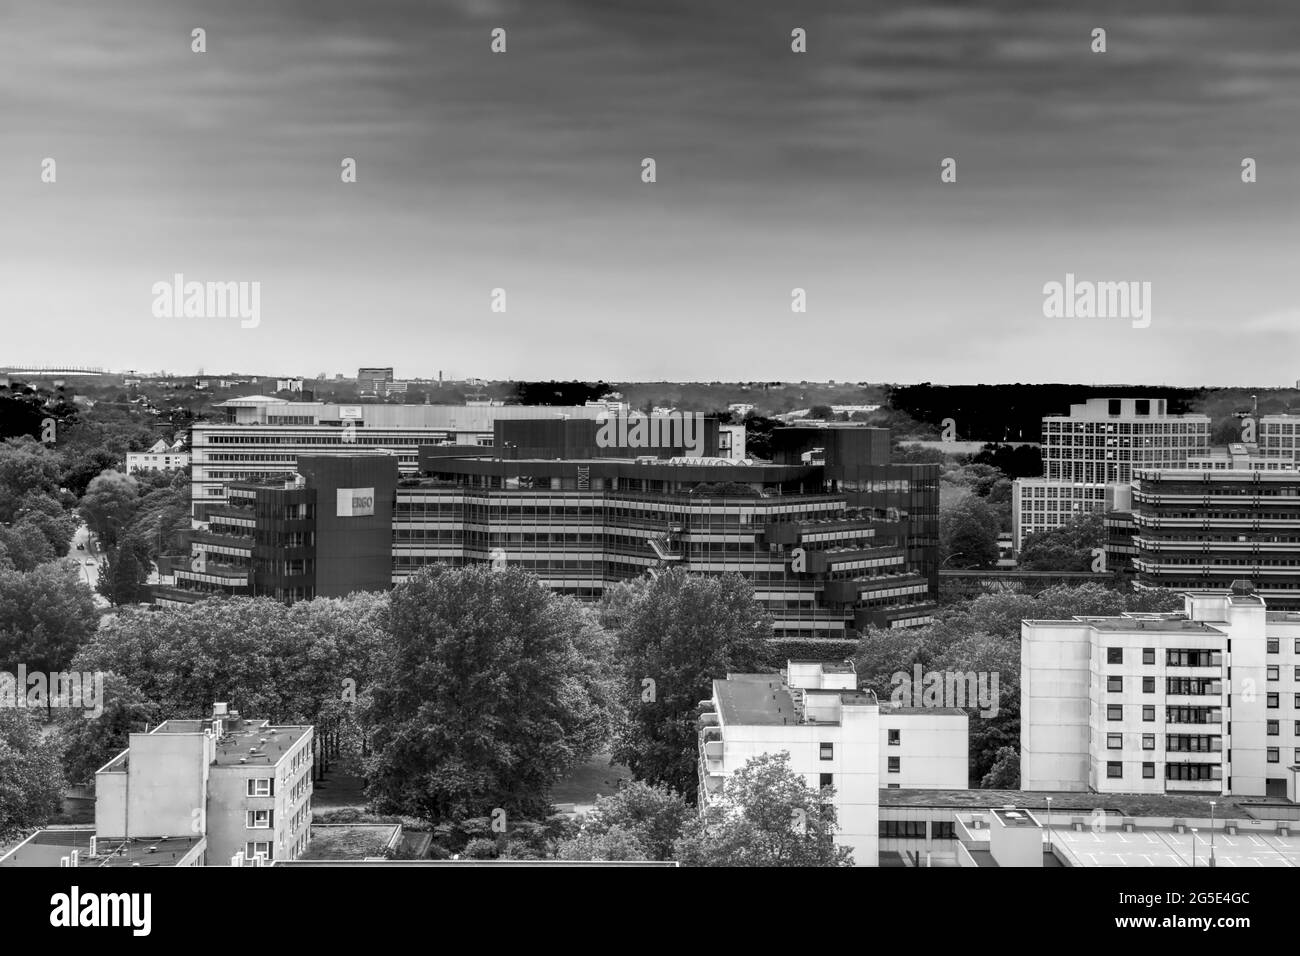 scenic view over a city district in monochrome Stock Photo